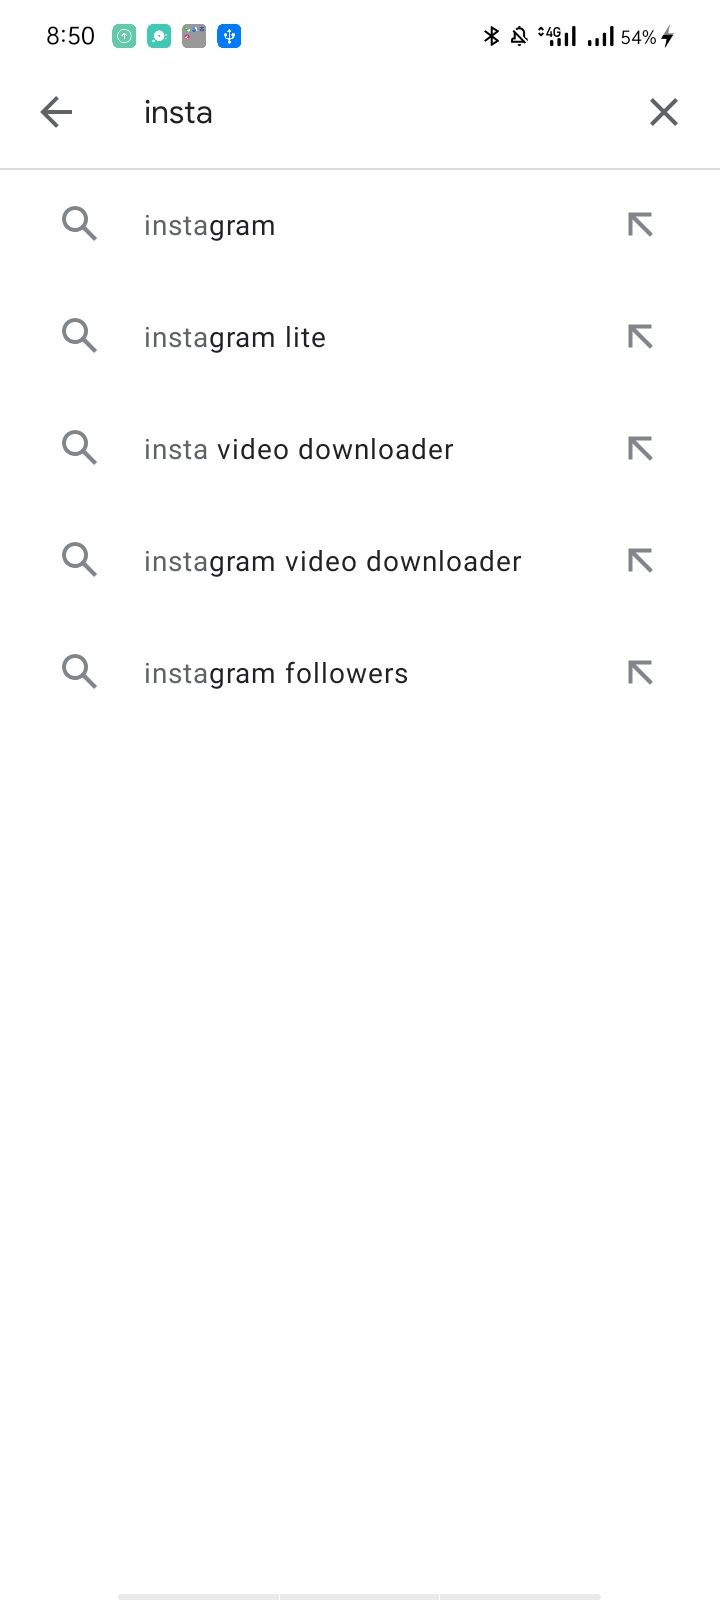 Searching Instagram in App Store